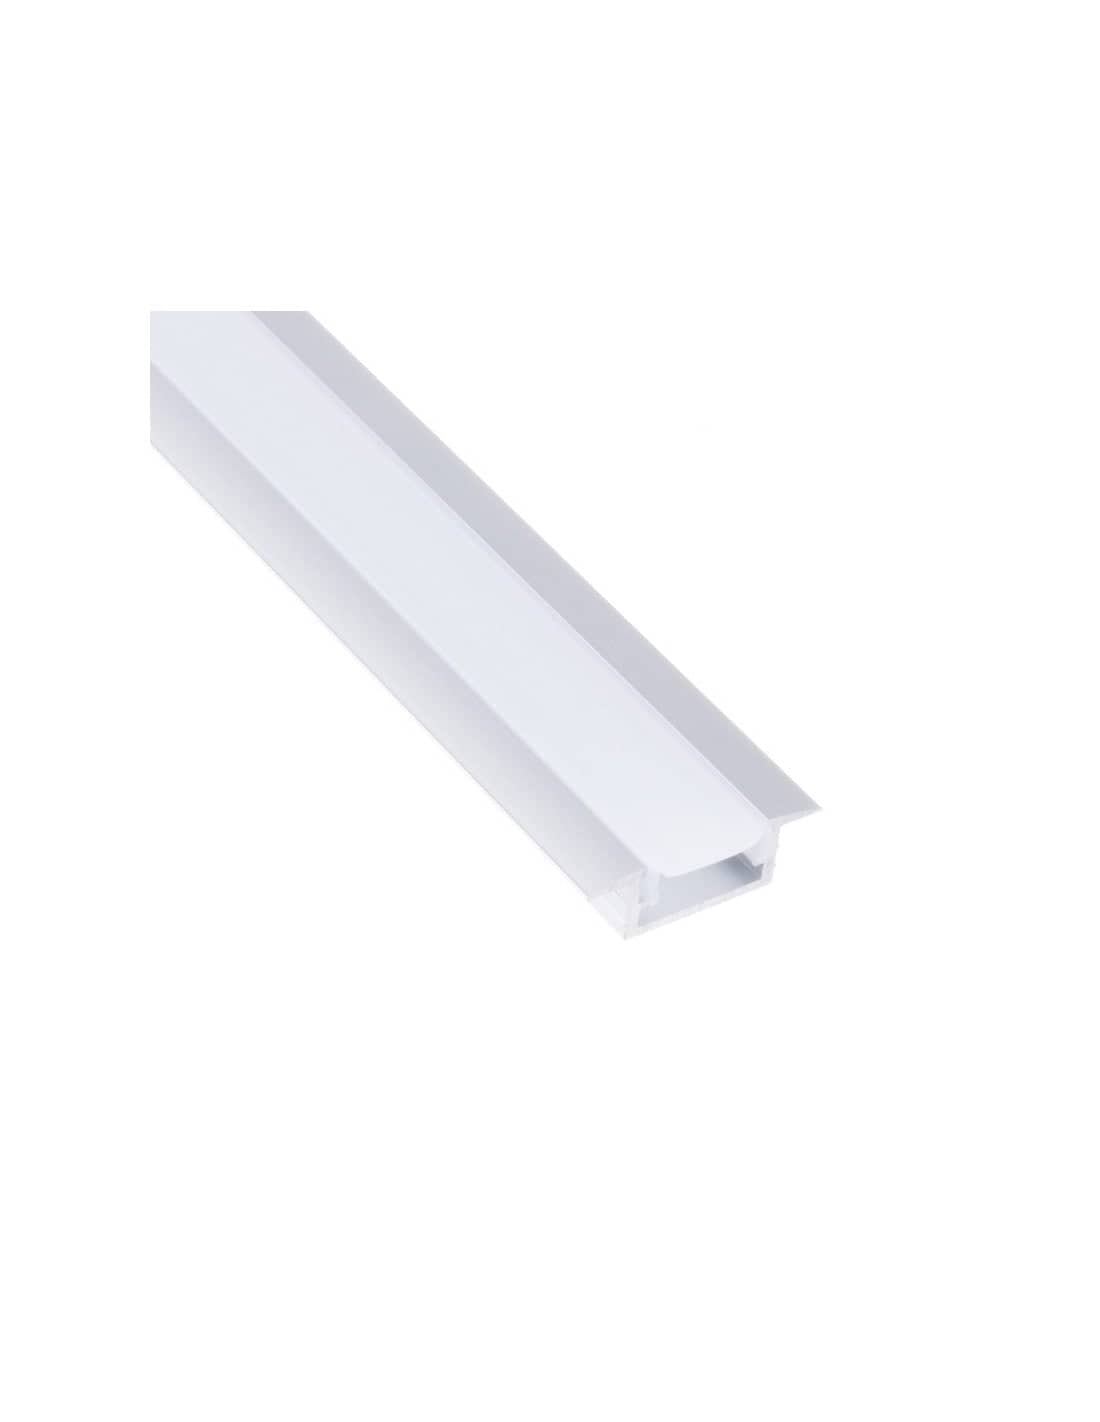 LED Profile INLINE 2m Aluminium/Opal   PROF-INLINE-OP-2M-W